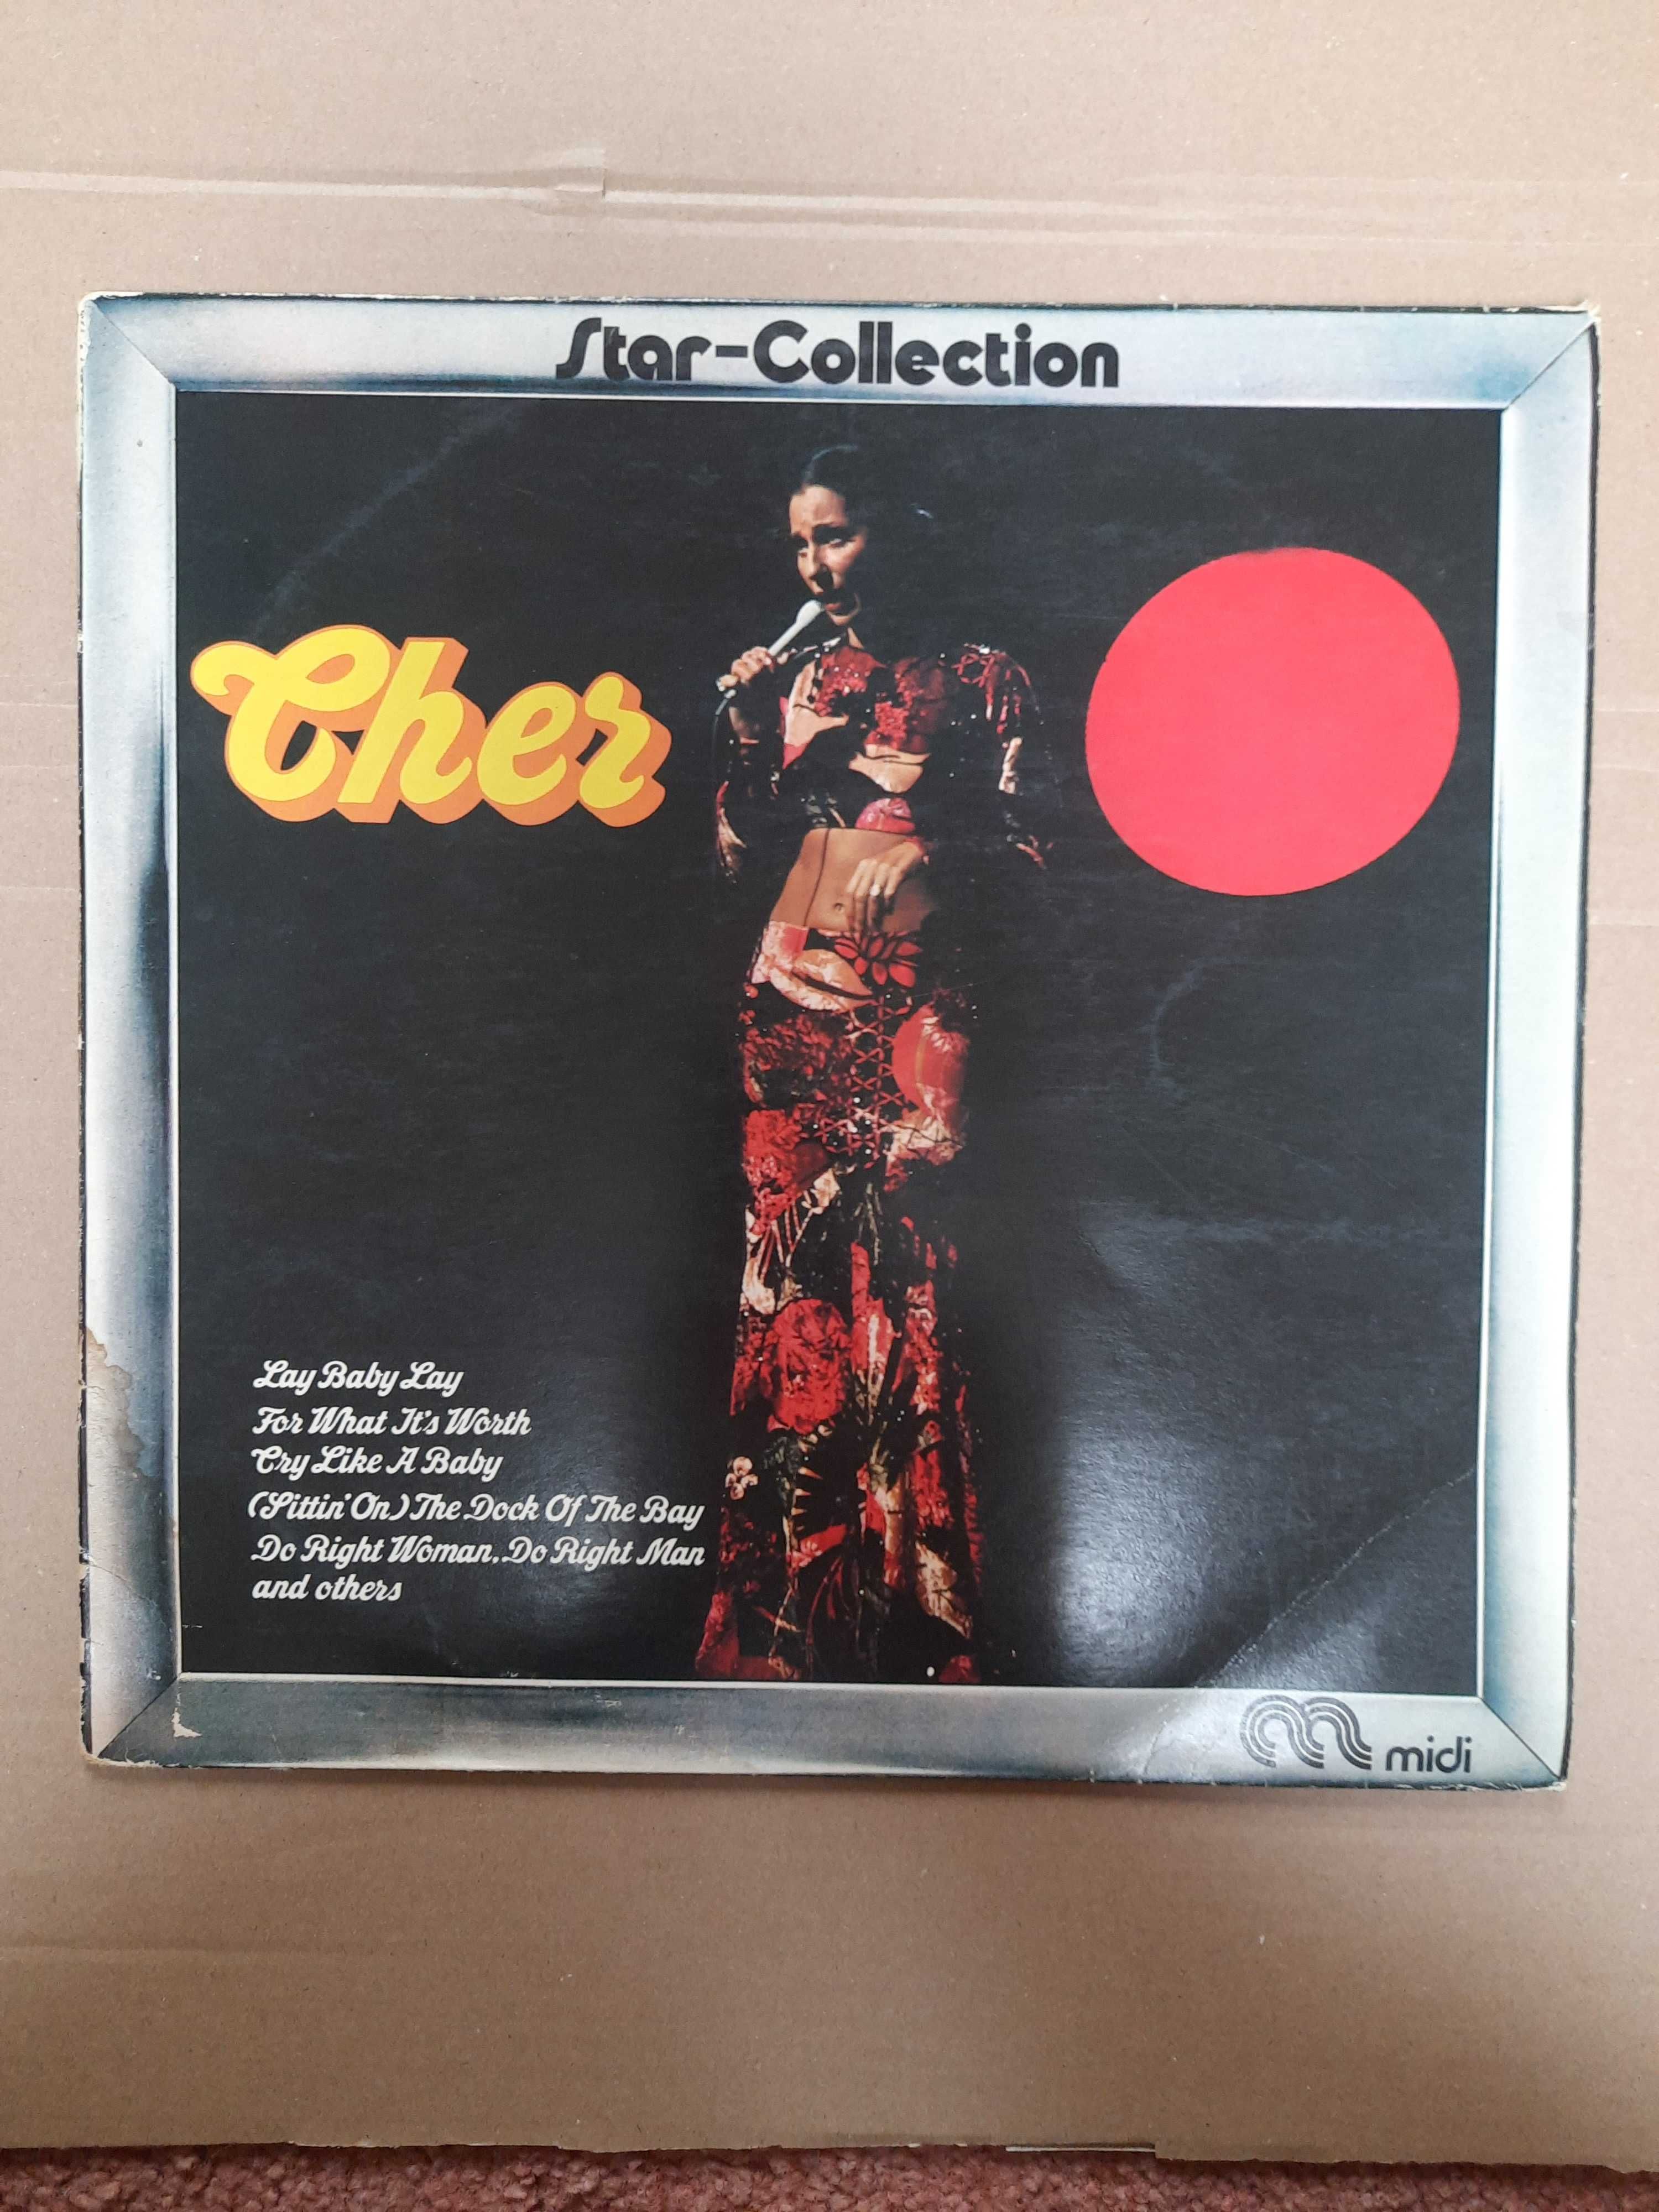 Płyta winylowa - Cher - Star Collection, 1974 r.